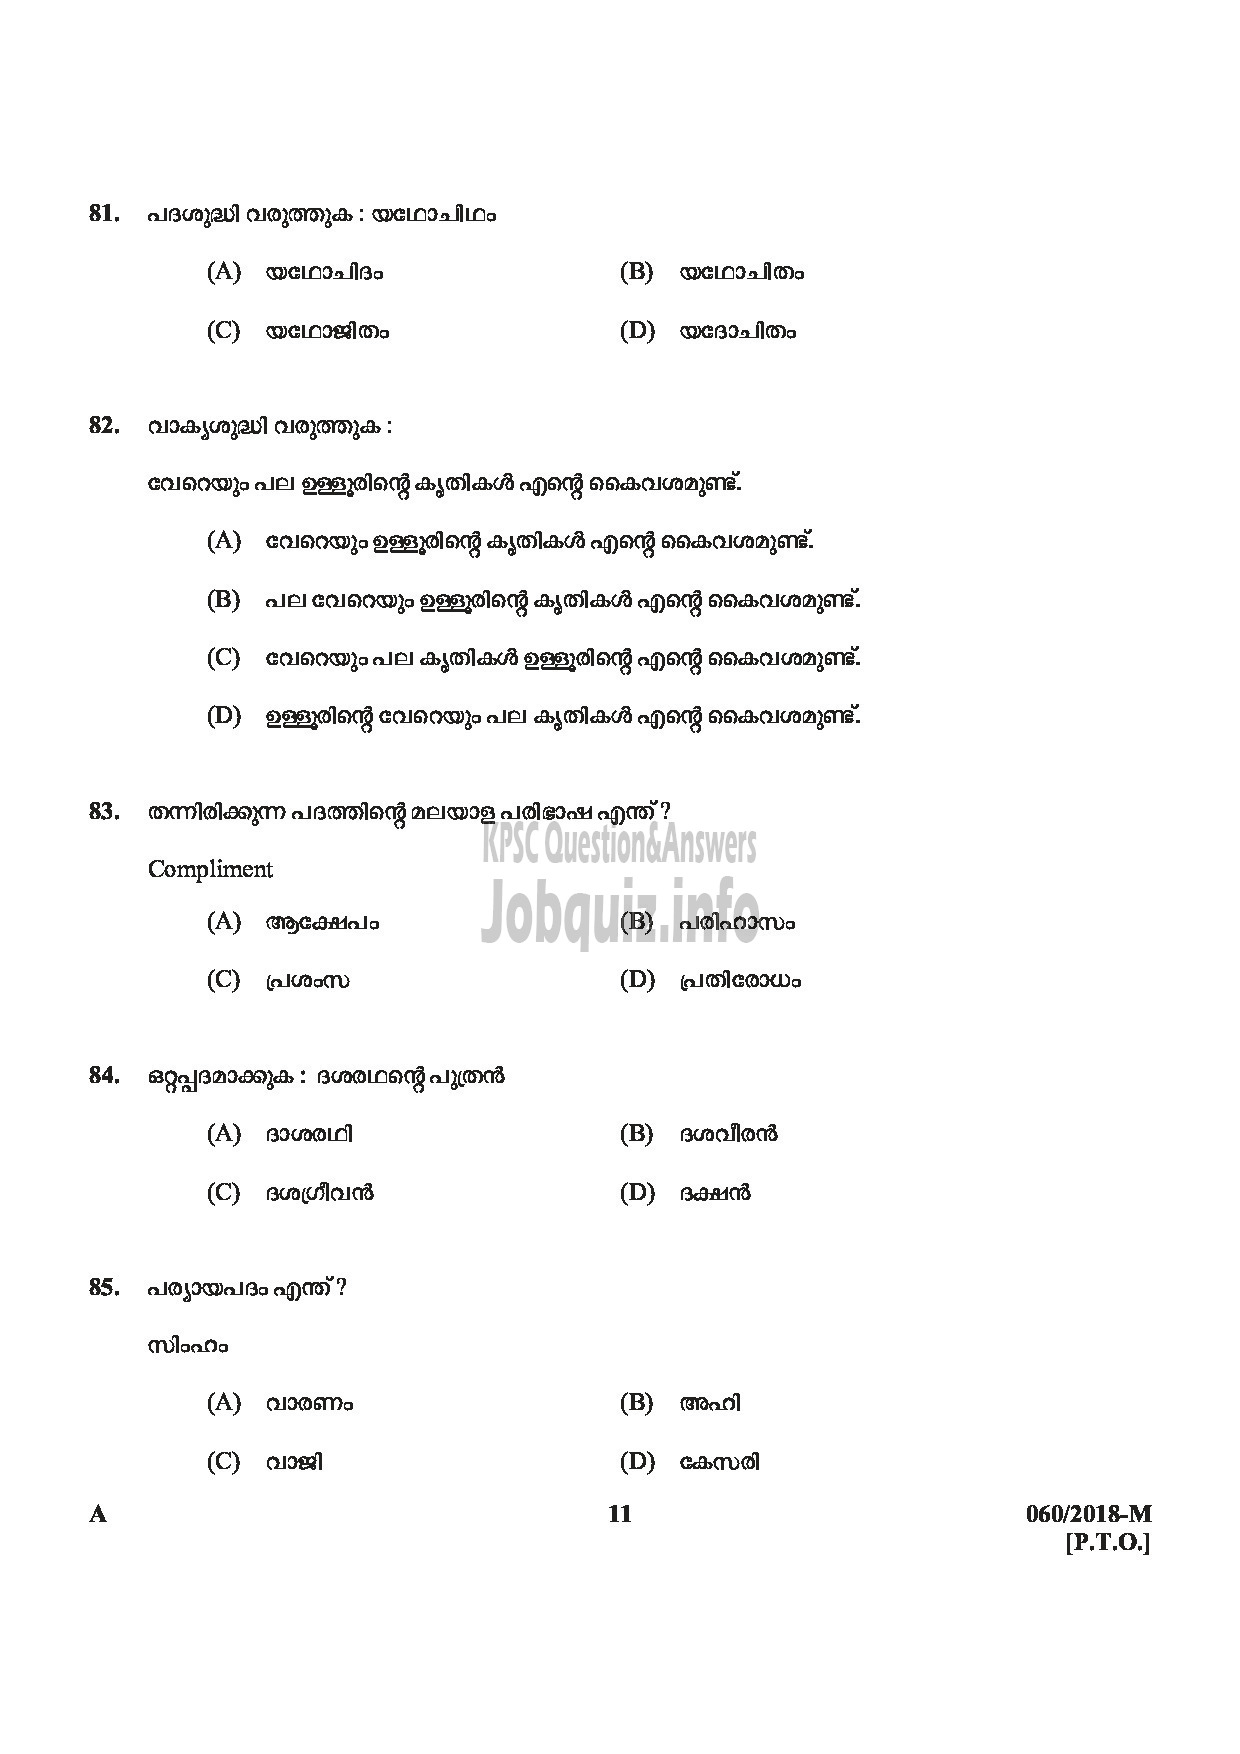 Kerala PSC Question Paper - JUNIOR ASSISTANT / CASHIER / ASSISTANT GRADE II / CLERK GR I KSFE LTD / KSEB LTD / KSRTC / FOAM MATTINGS ETC ENGLISH / MALAYALAM-11